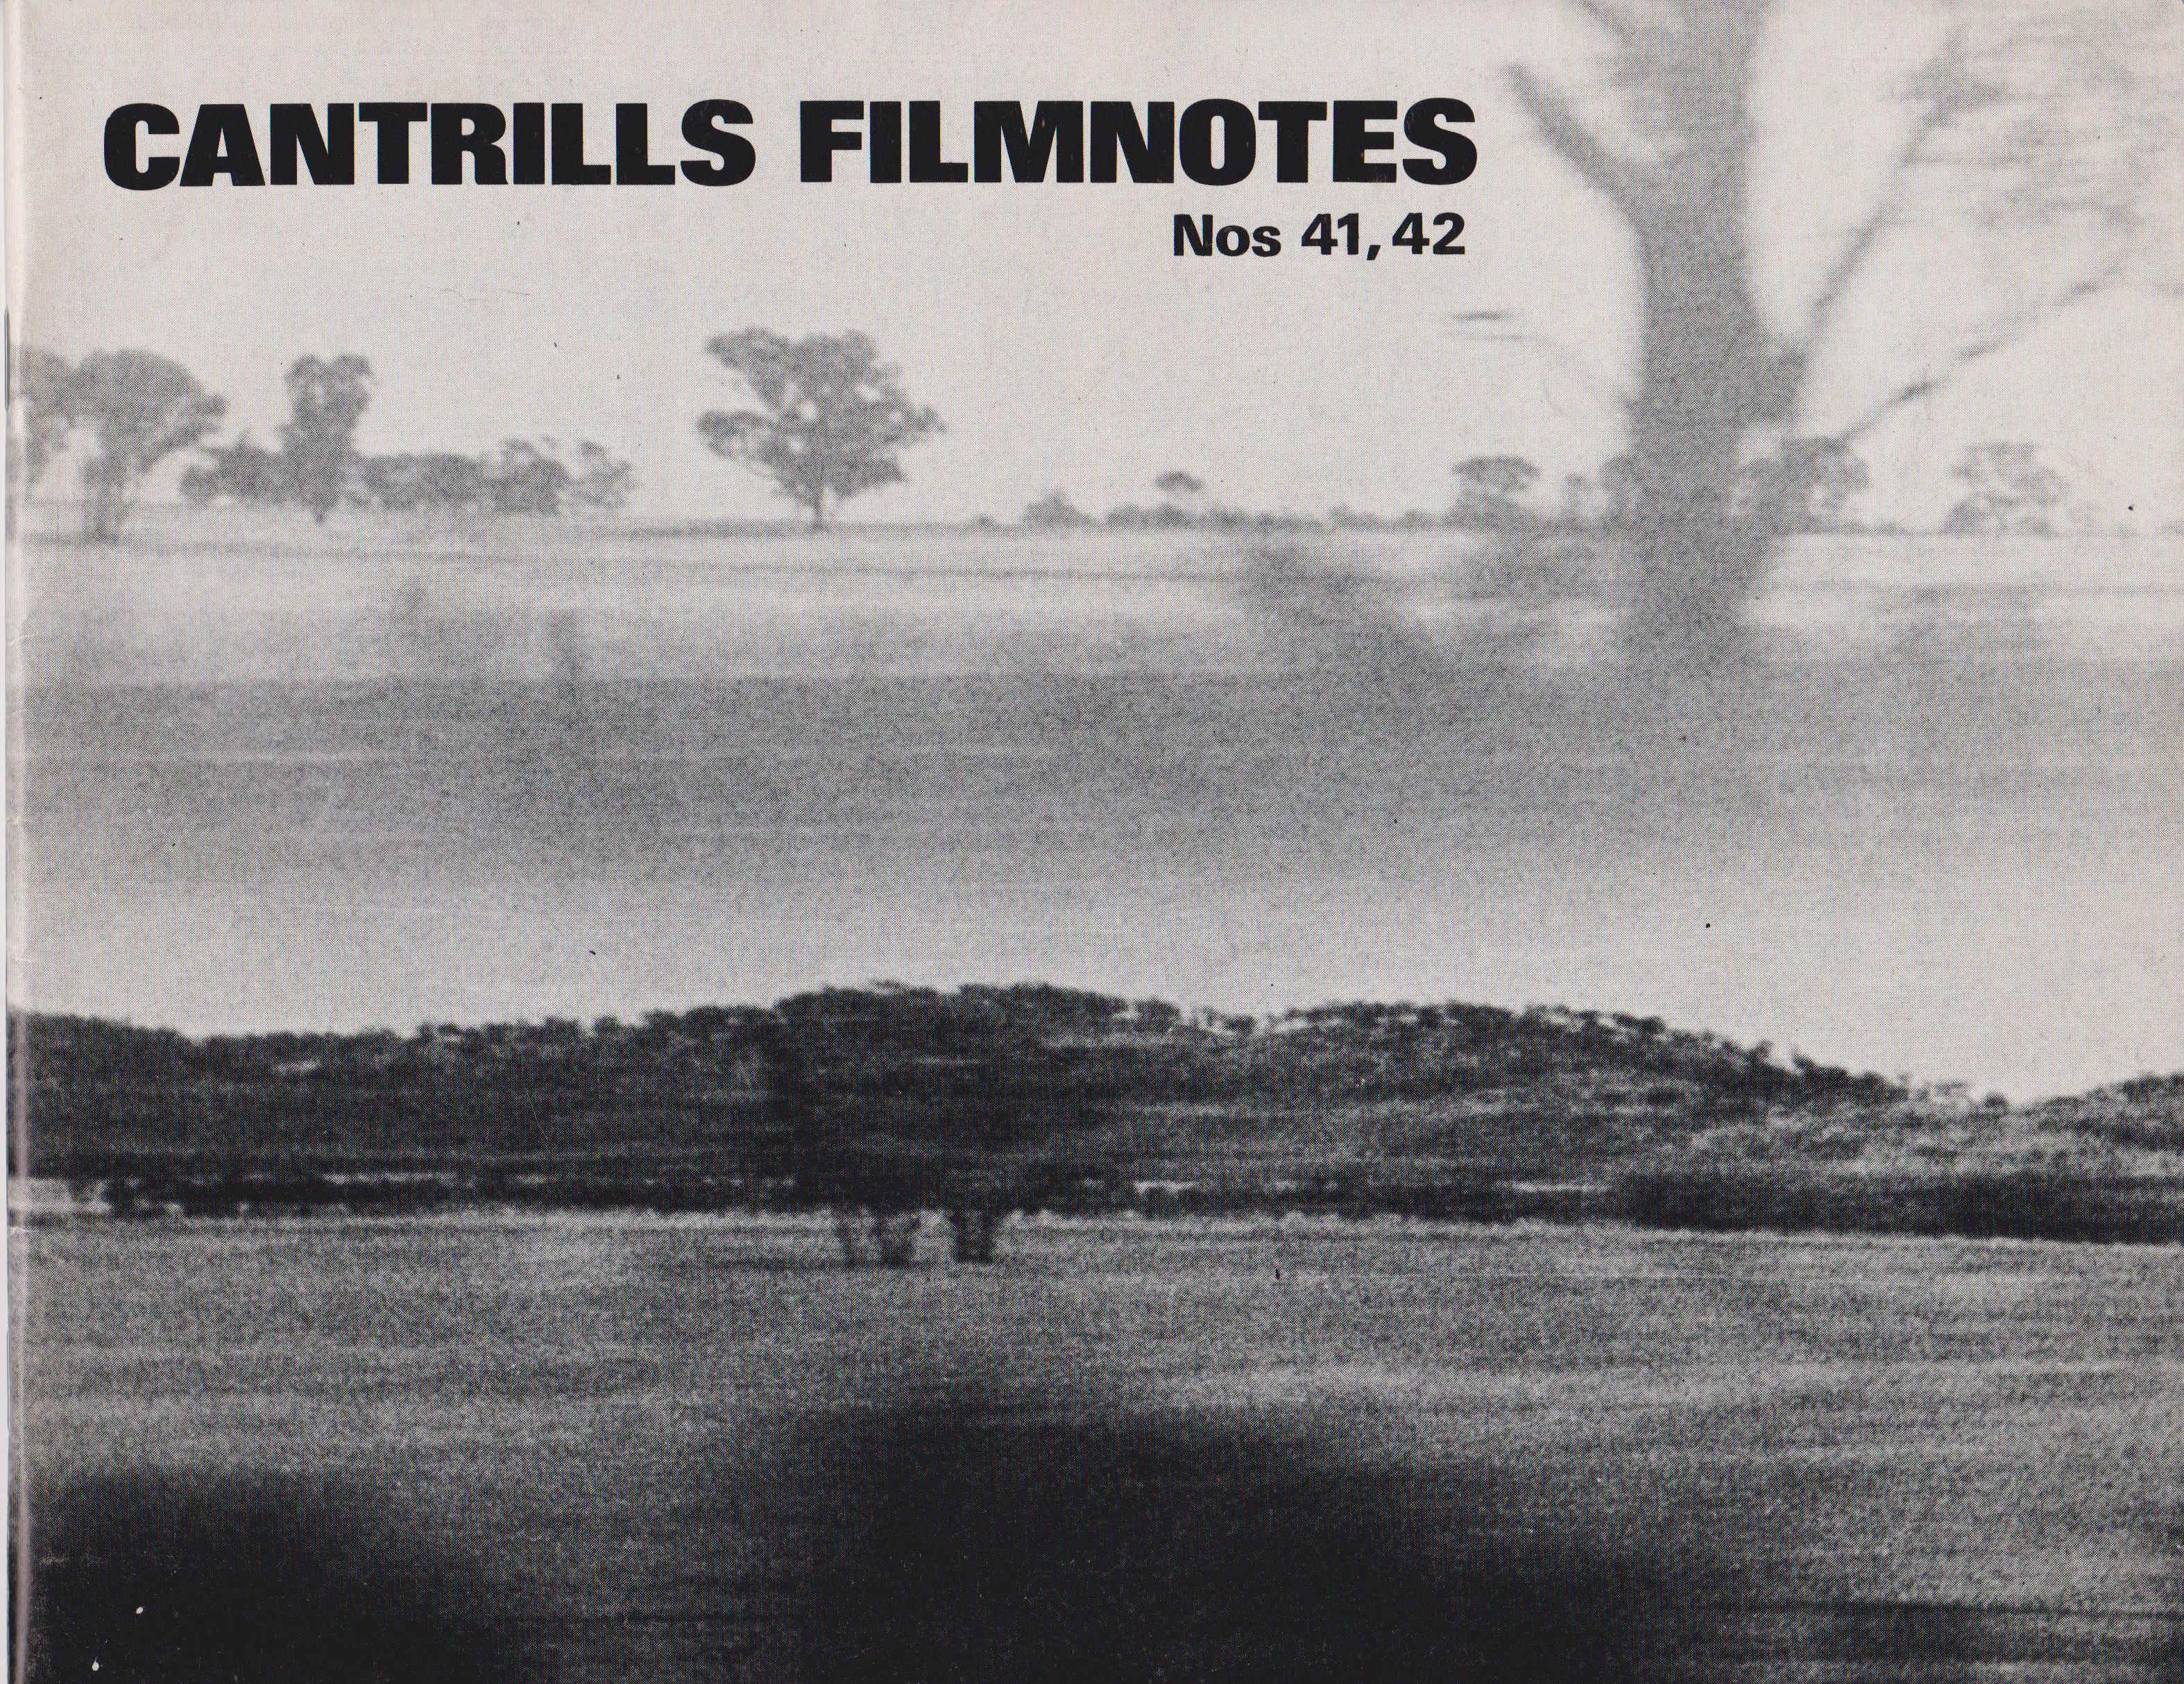 Cantrills Filmnotes Nos 41,42 / June 1983.